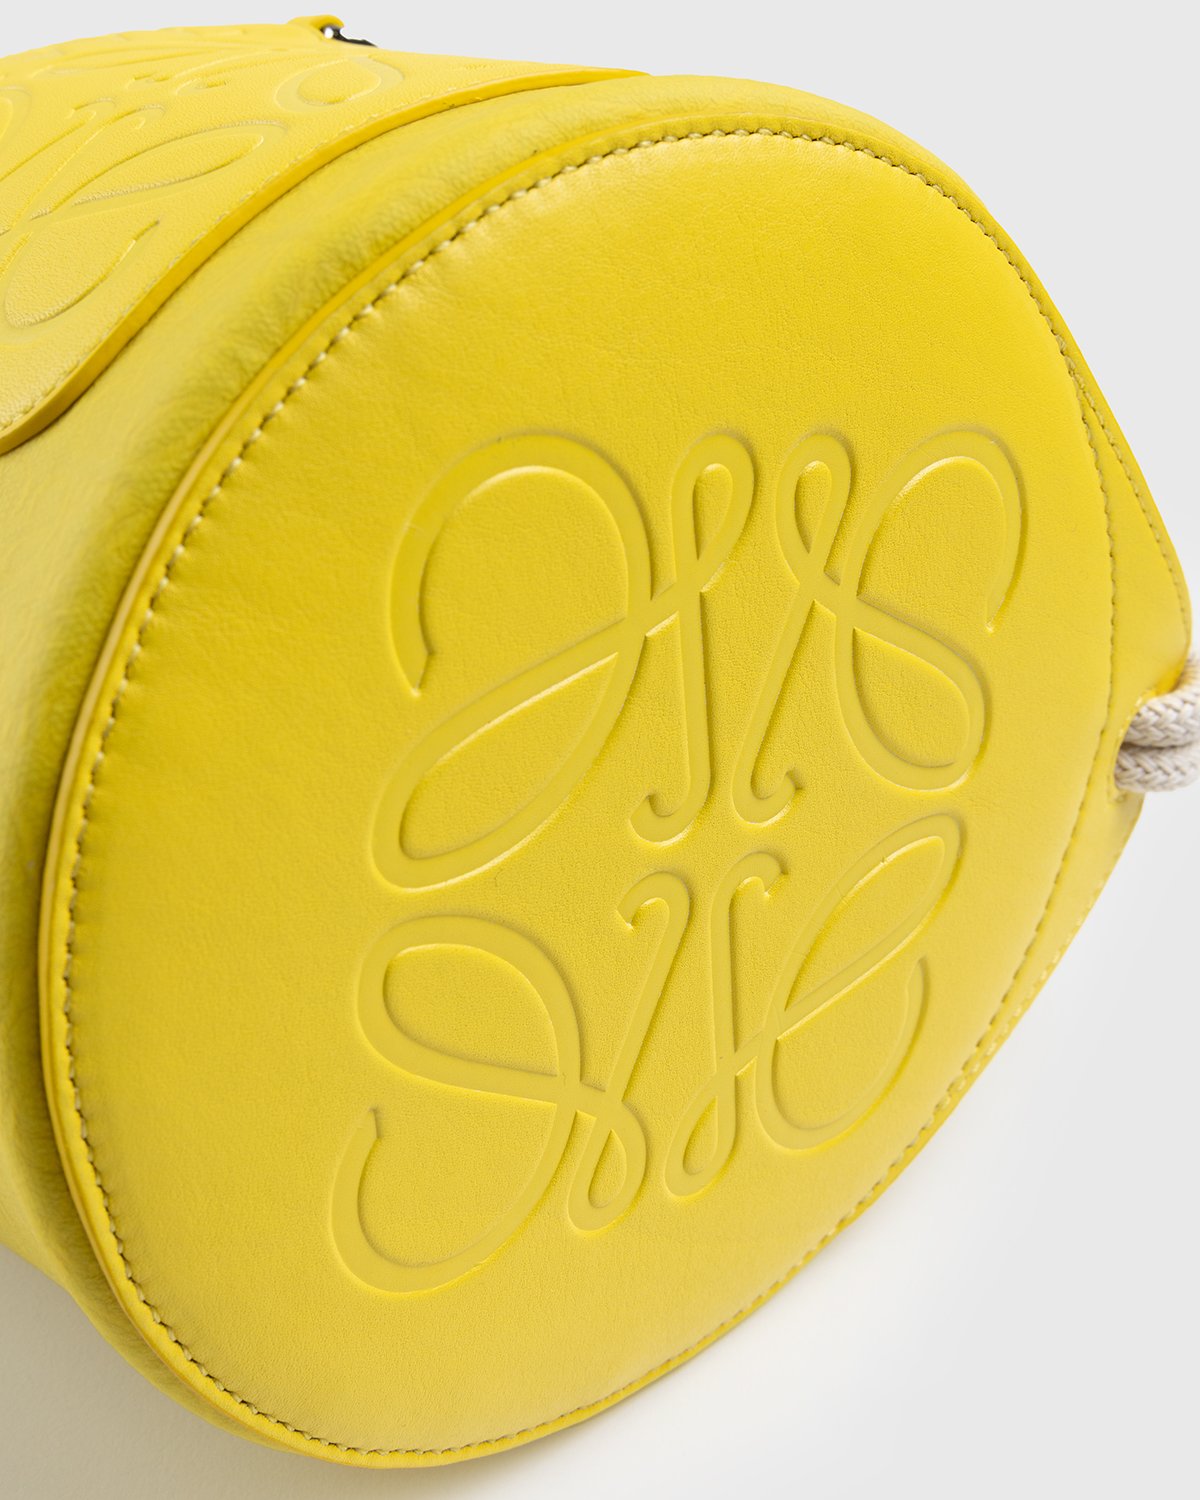 Loewe - Paula's Ibiza Small Sailor Bag Ecru/Lemon - Accessories - Yellow - Image 4